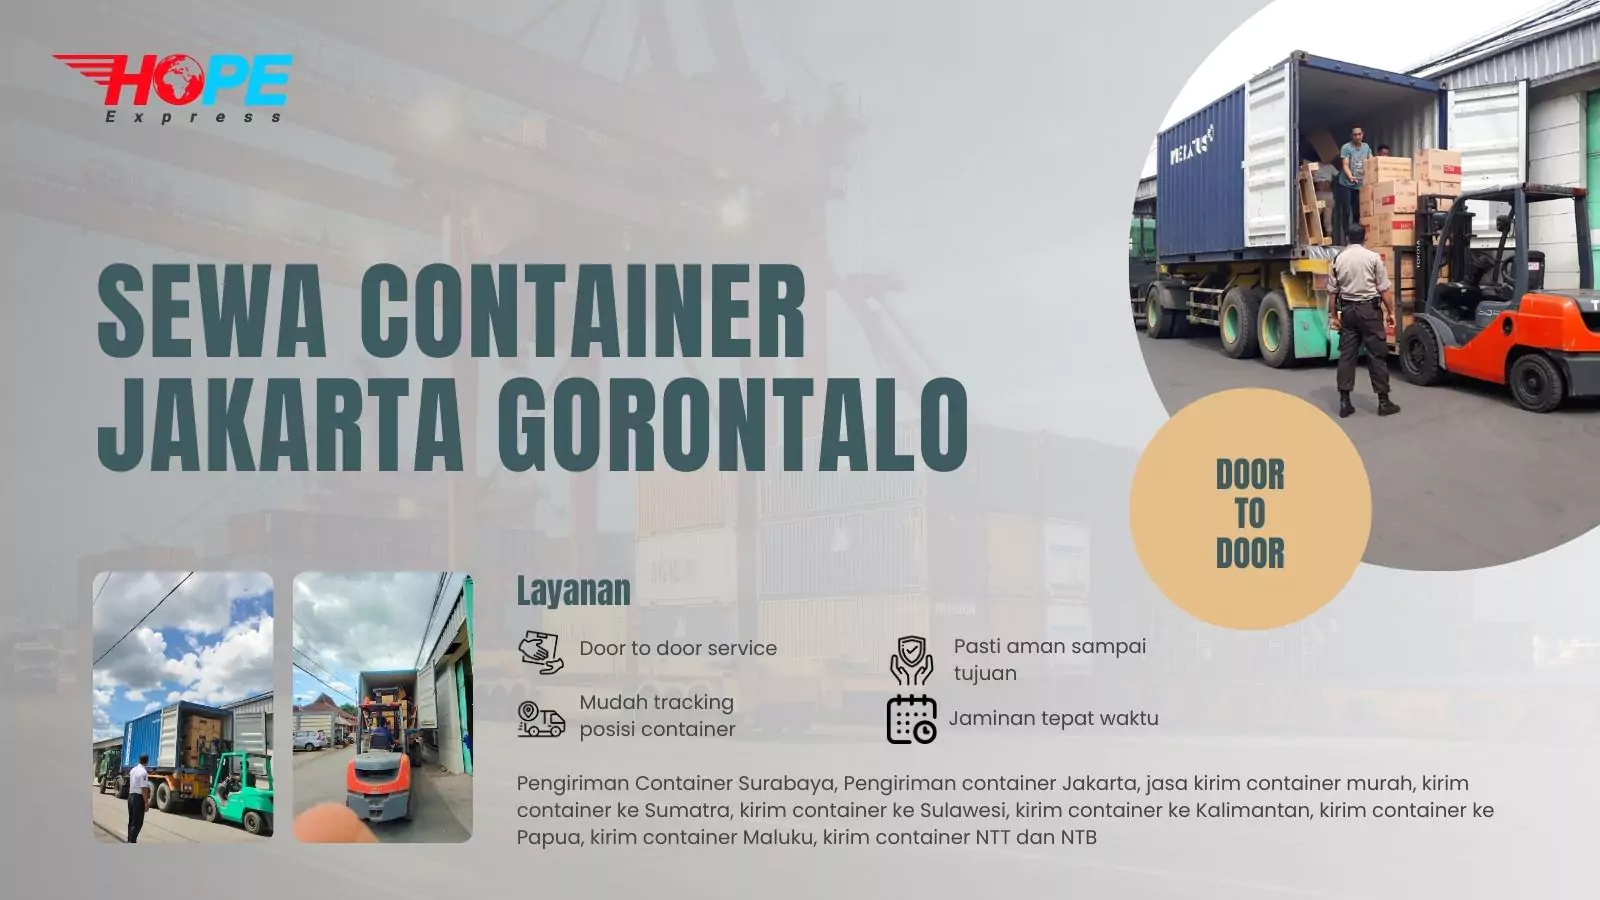 Sewa Container Jakarta Gorontalo